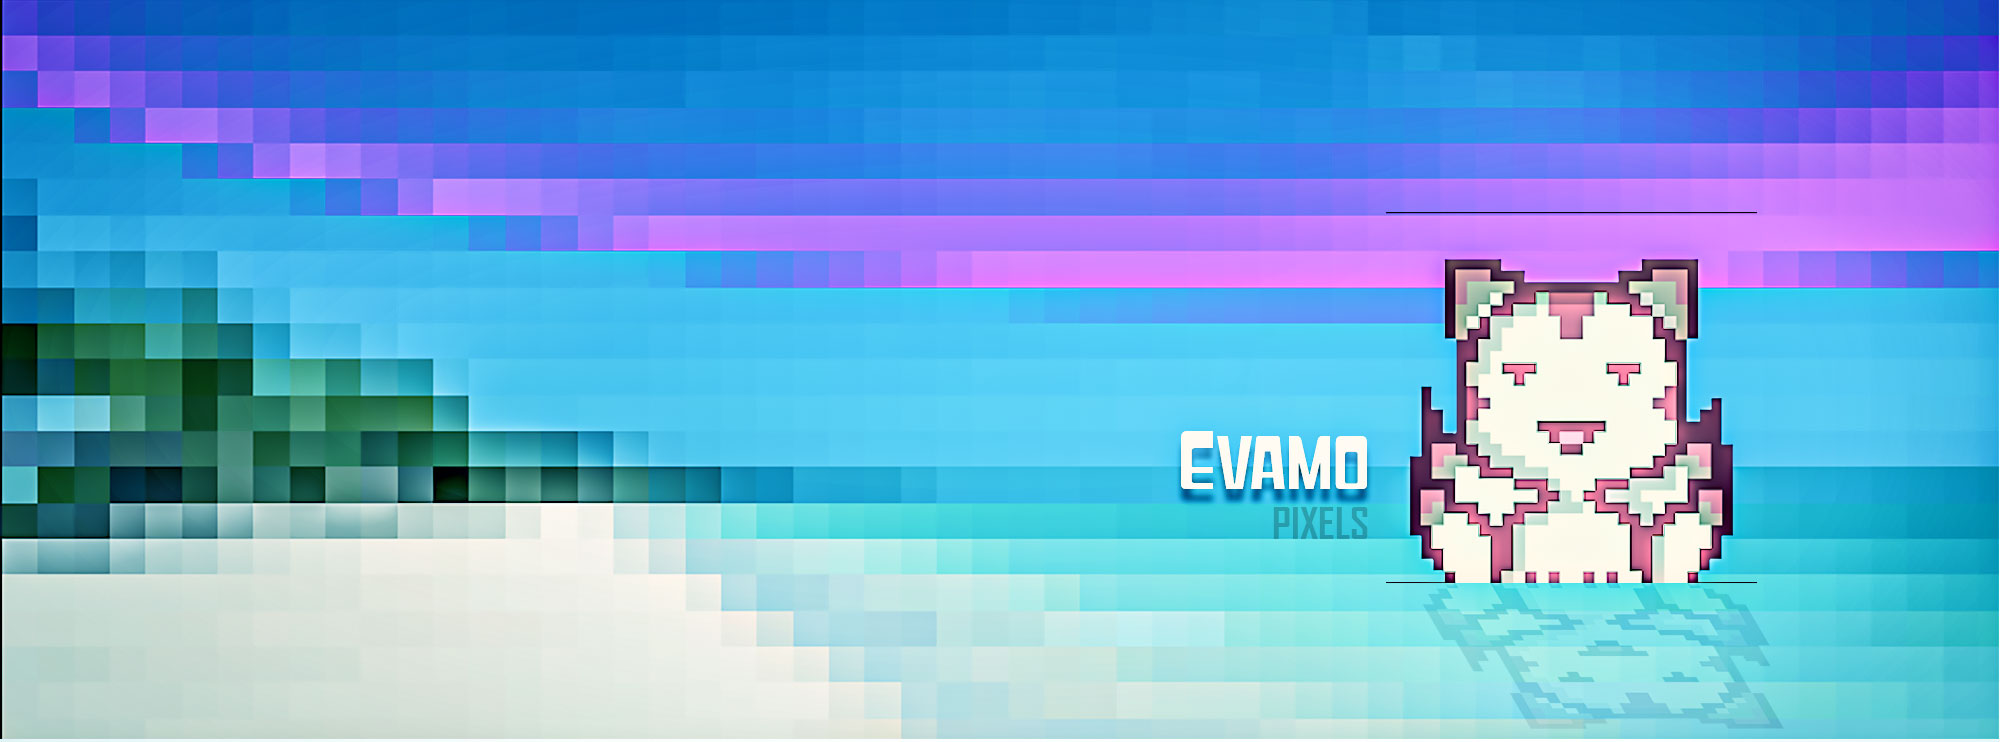 EVAMO banner